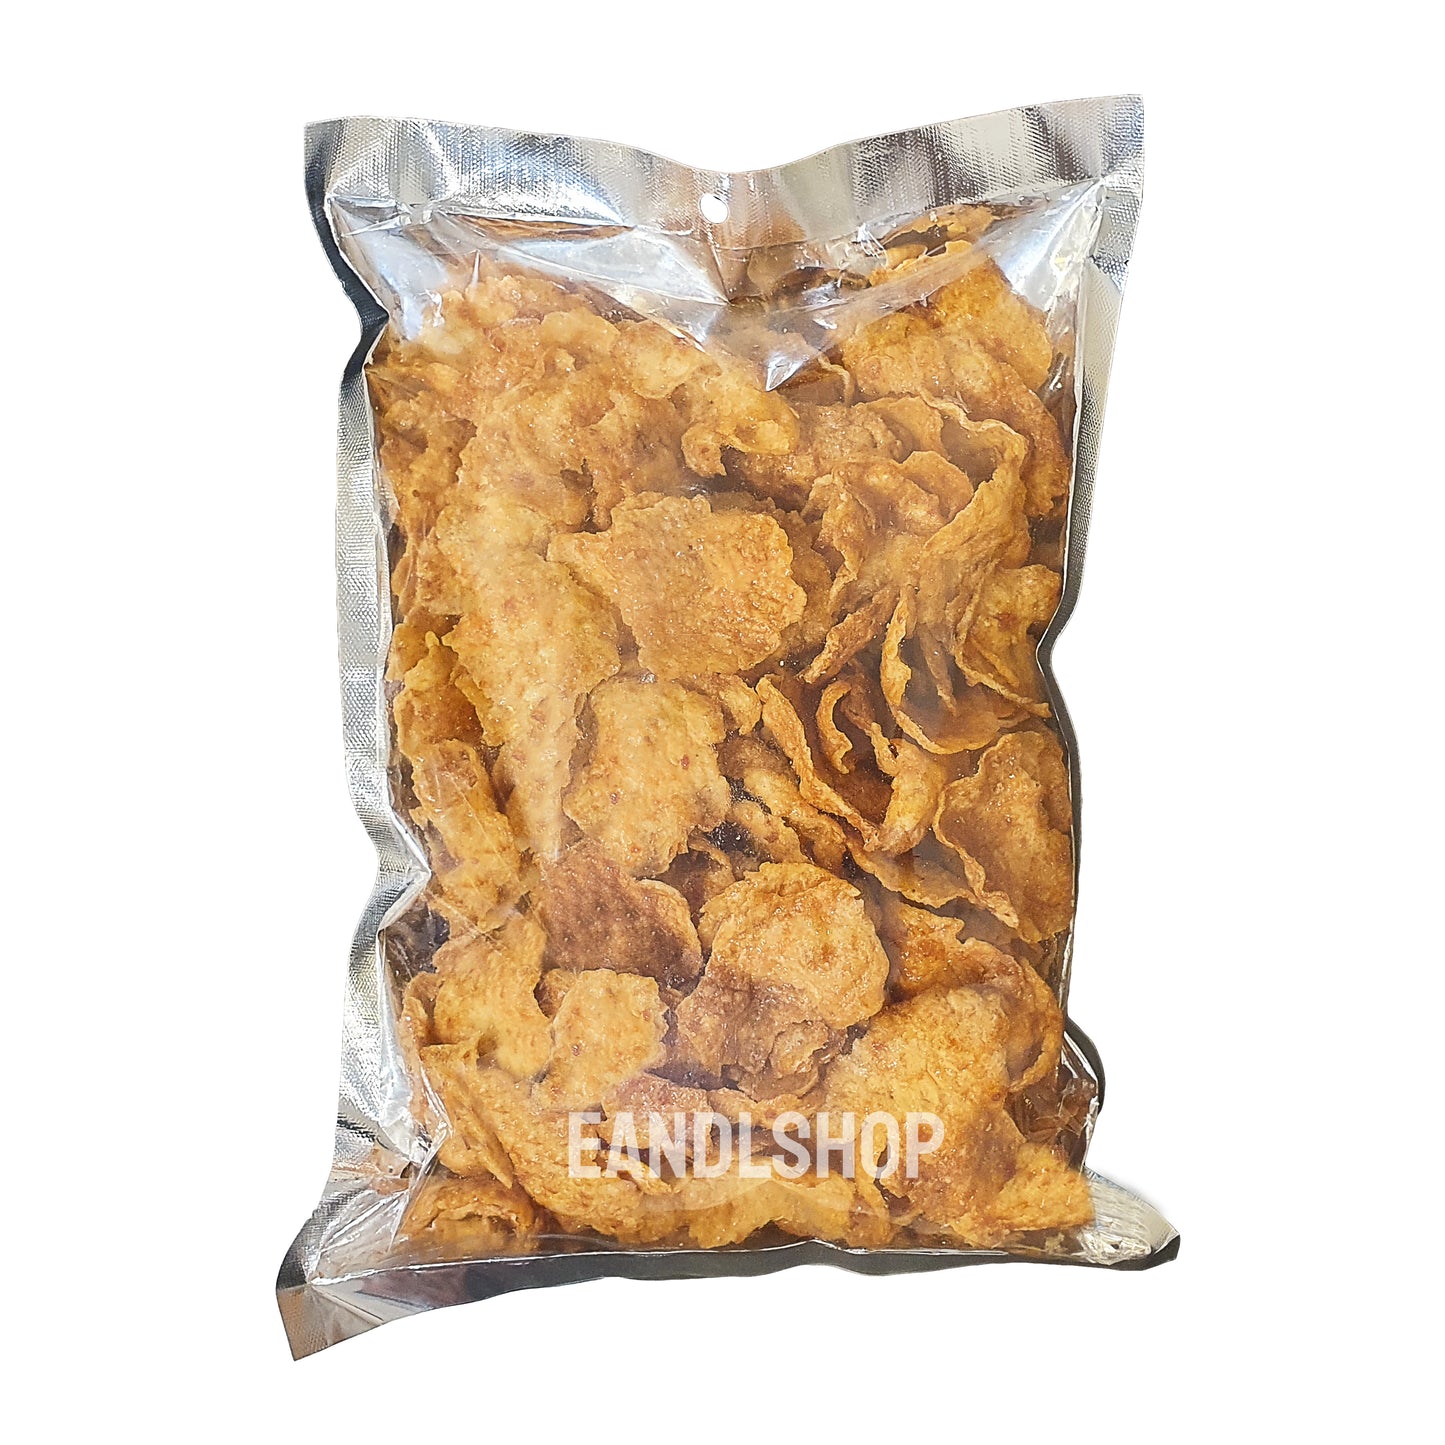 Belinjau cracker sweet & spicy. Old-school biscuits, modern snacks (chips, crackers), cakes, gummies, plums, dried fruits, nuts, herbal tea – available at www.EANDLSHOP.com